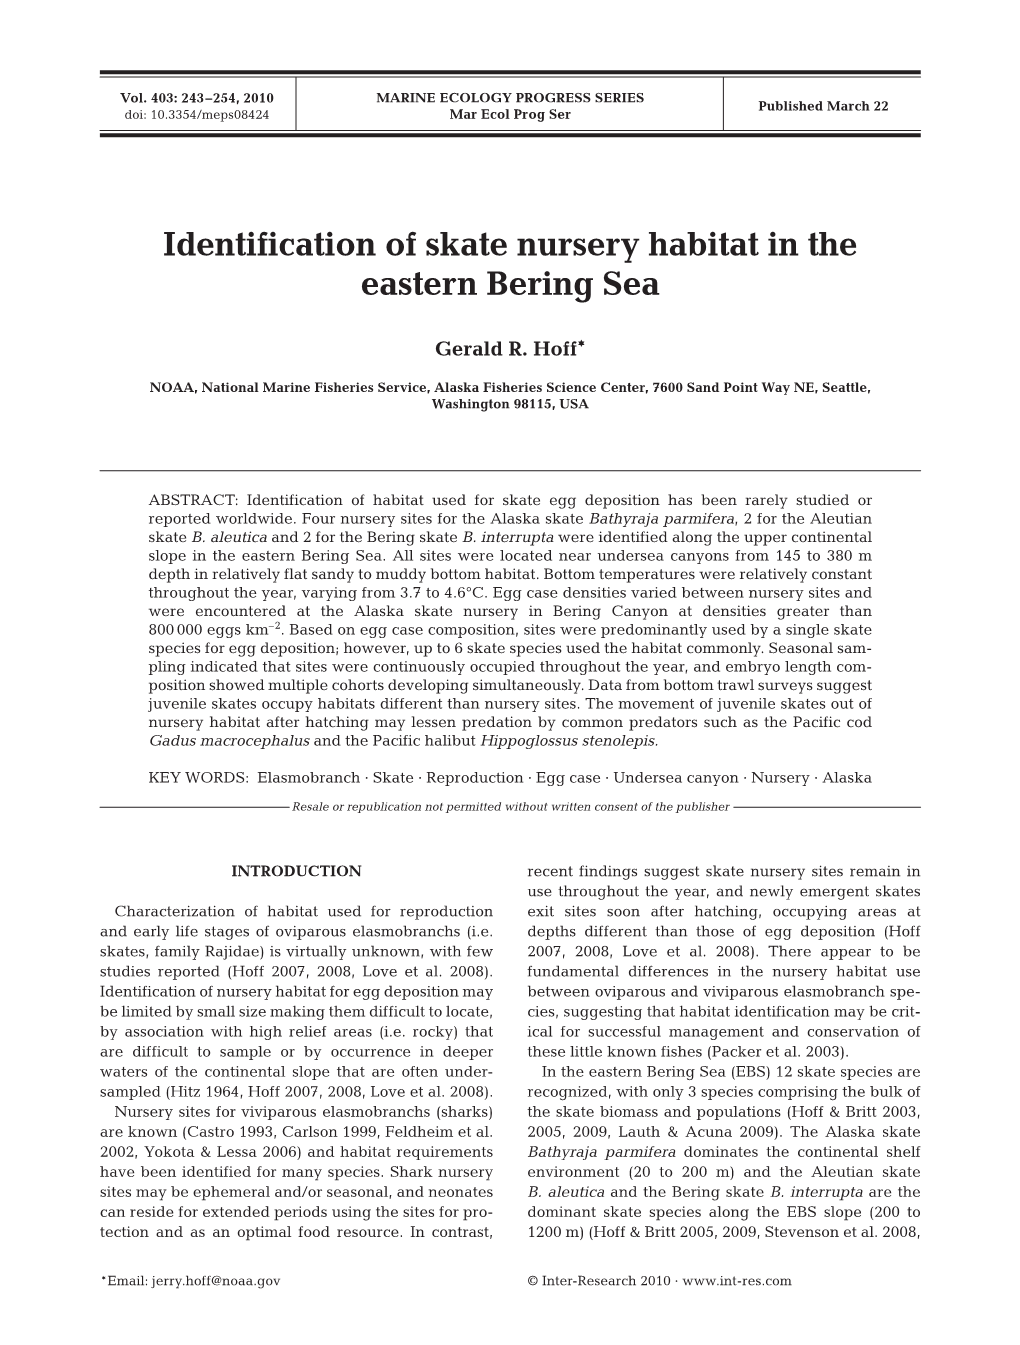 Identification of Skate Nursery Habitat in the Eastern Bering Sea